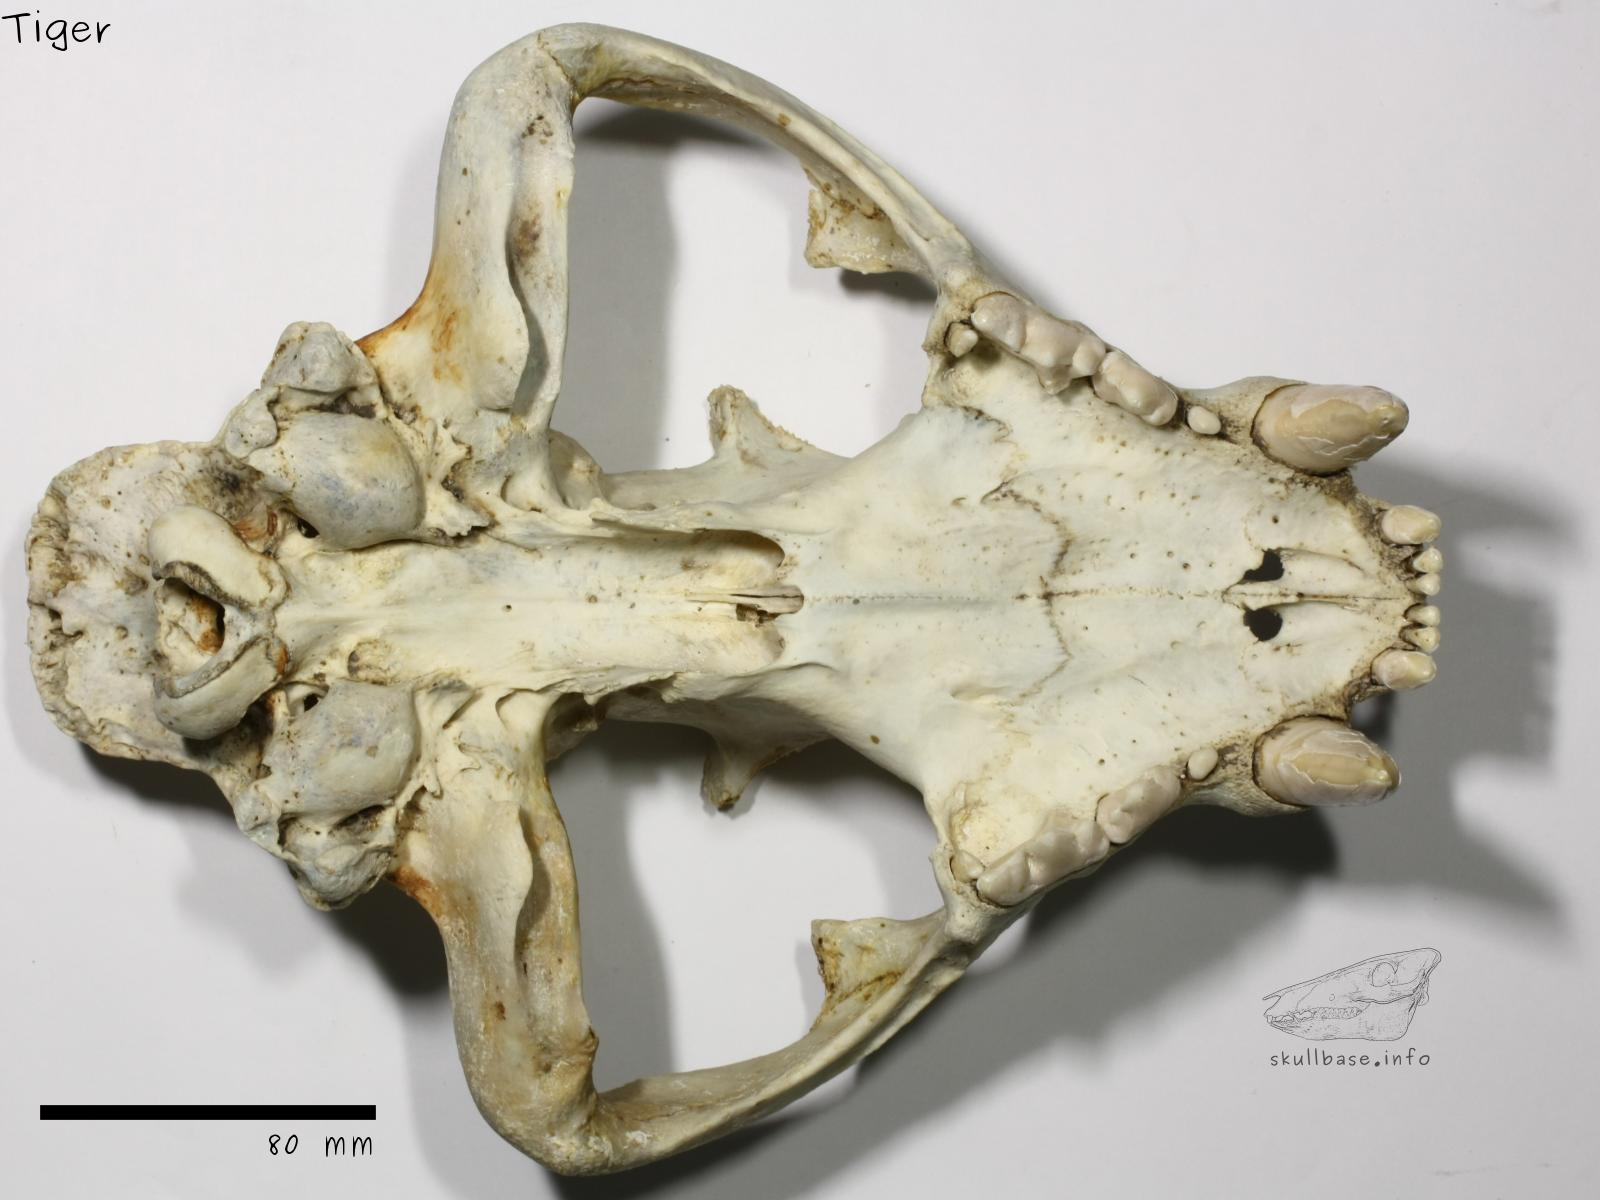 Tiger (Panthera tigris) skull ventral view